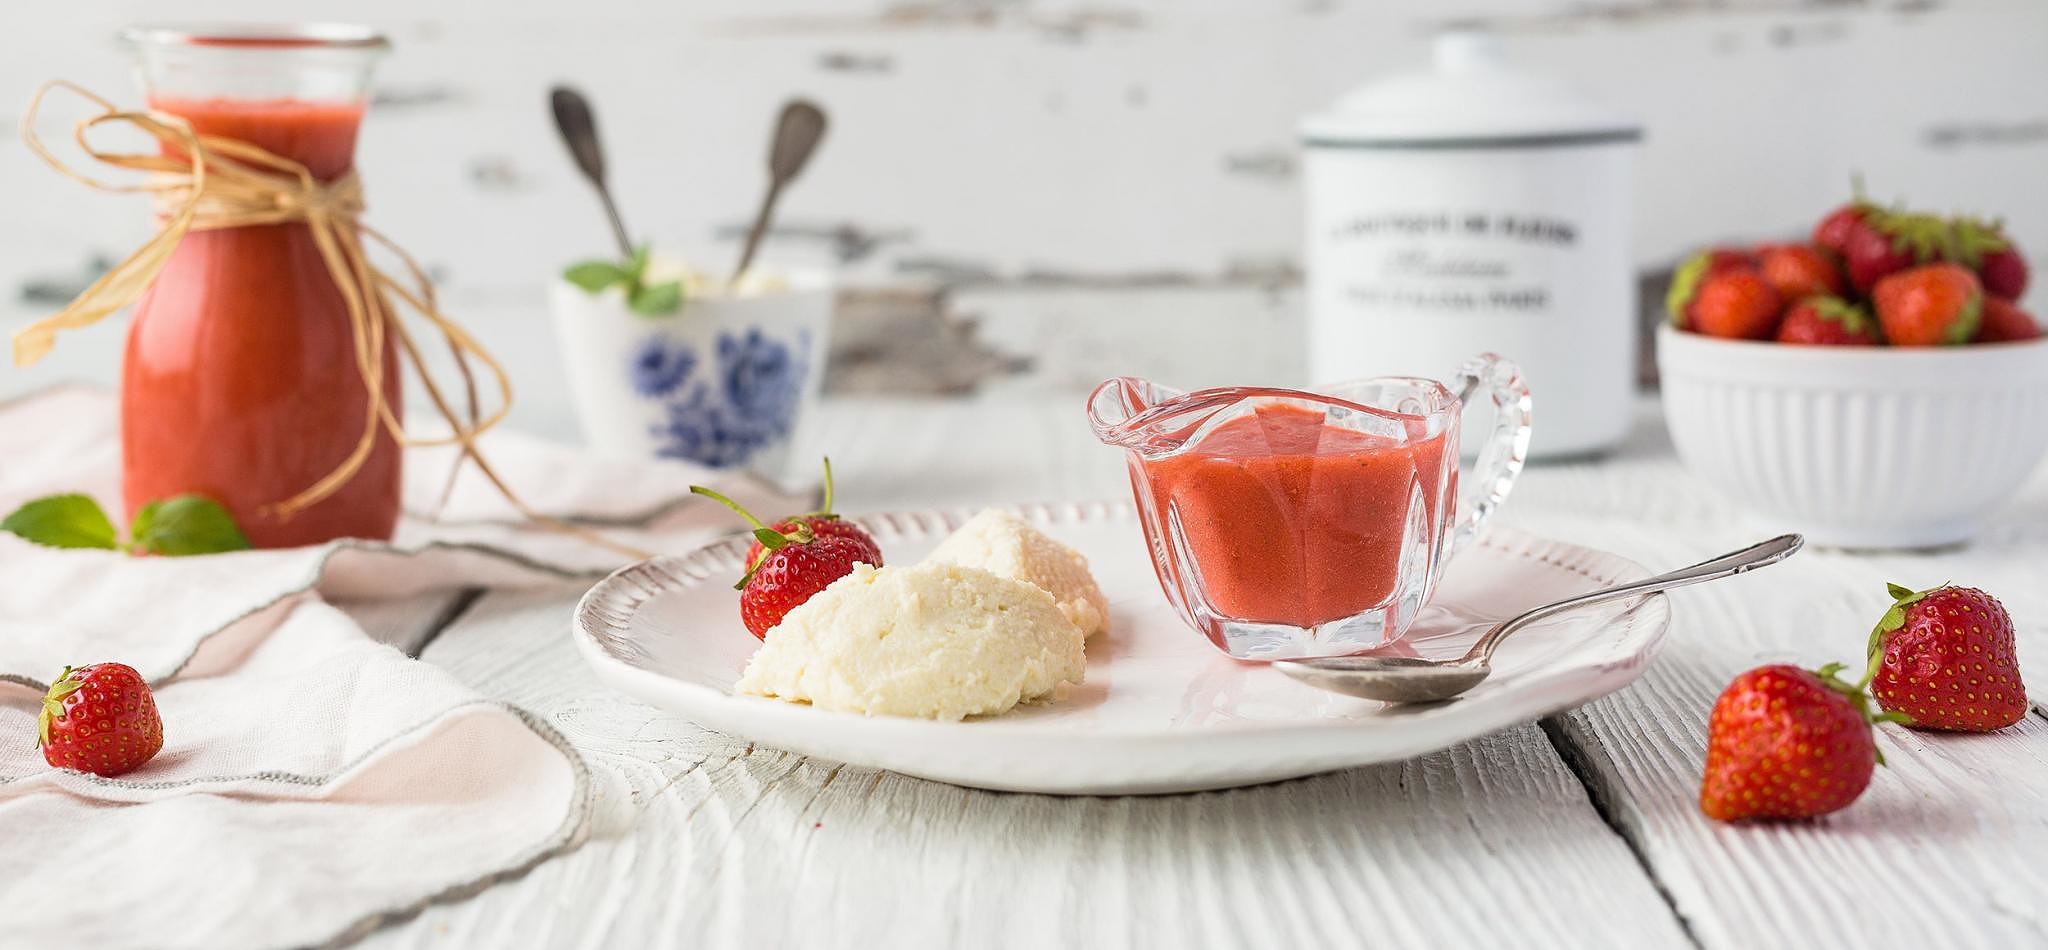 Cold Strawberry Soup with Semolina Gnocchi | Recipe | HERMESETAS UK